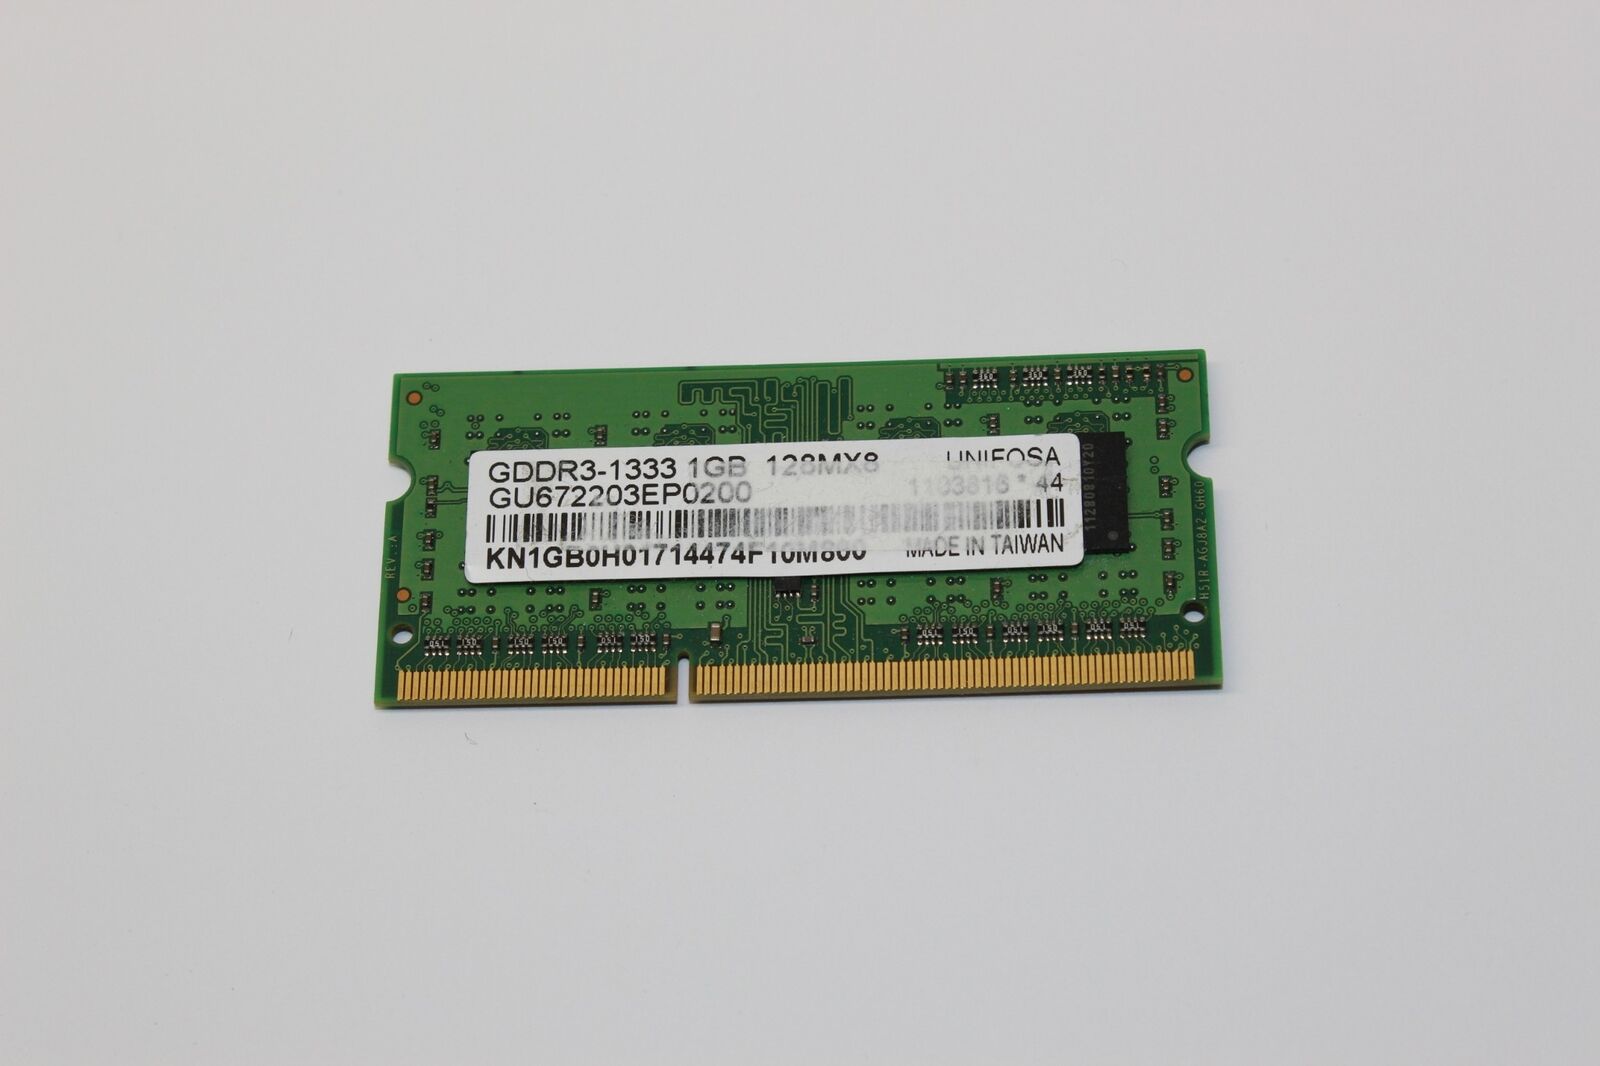 Unifosa GU672203EP0200 GDDR3-1333 1GB 128MX8 RAM Memory for Laptops